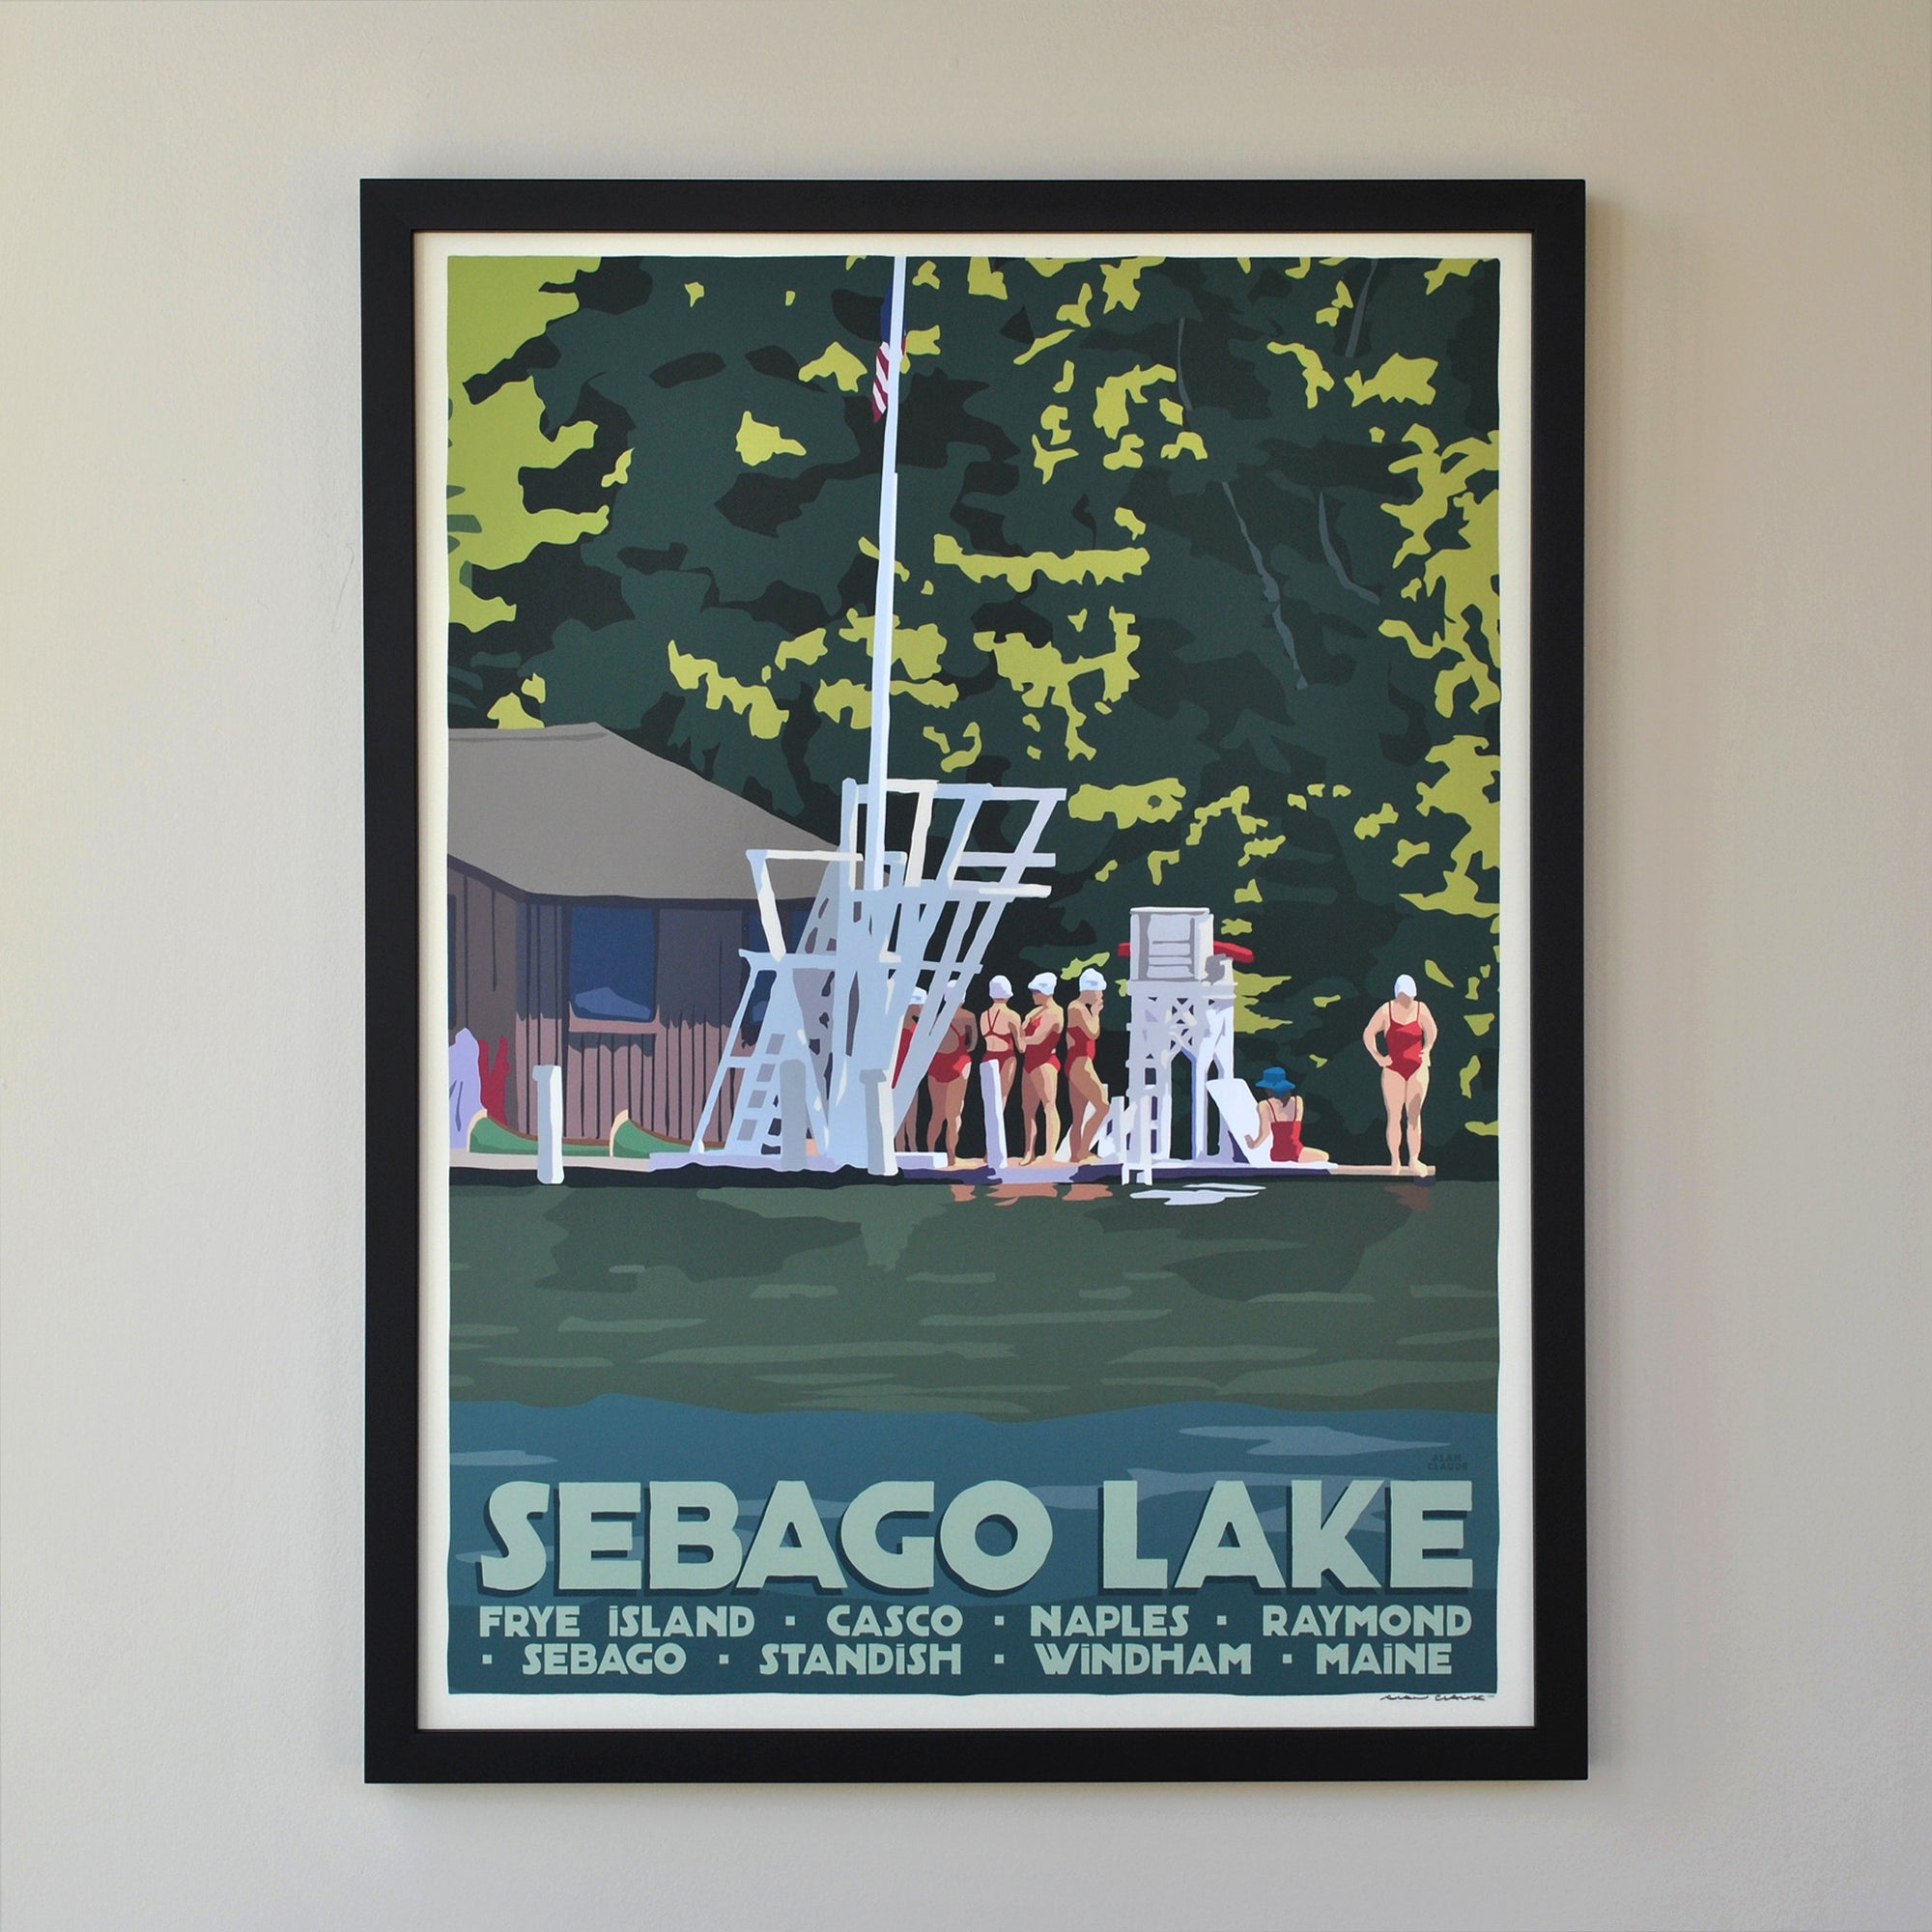 Sebago Lake Swimmers Art Print 18" x 24" Vertical Framed Travel Poster By Alan Claude - Maine